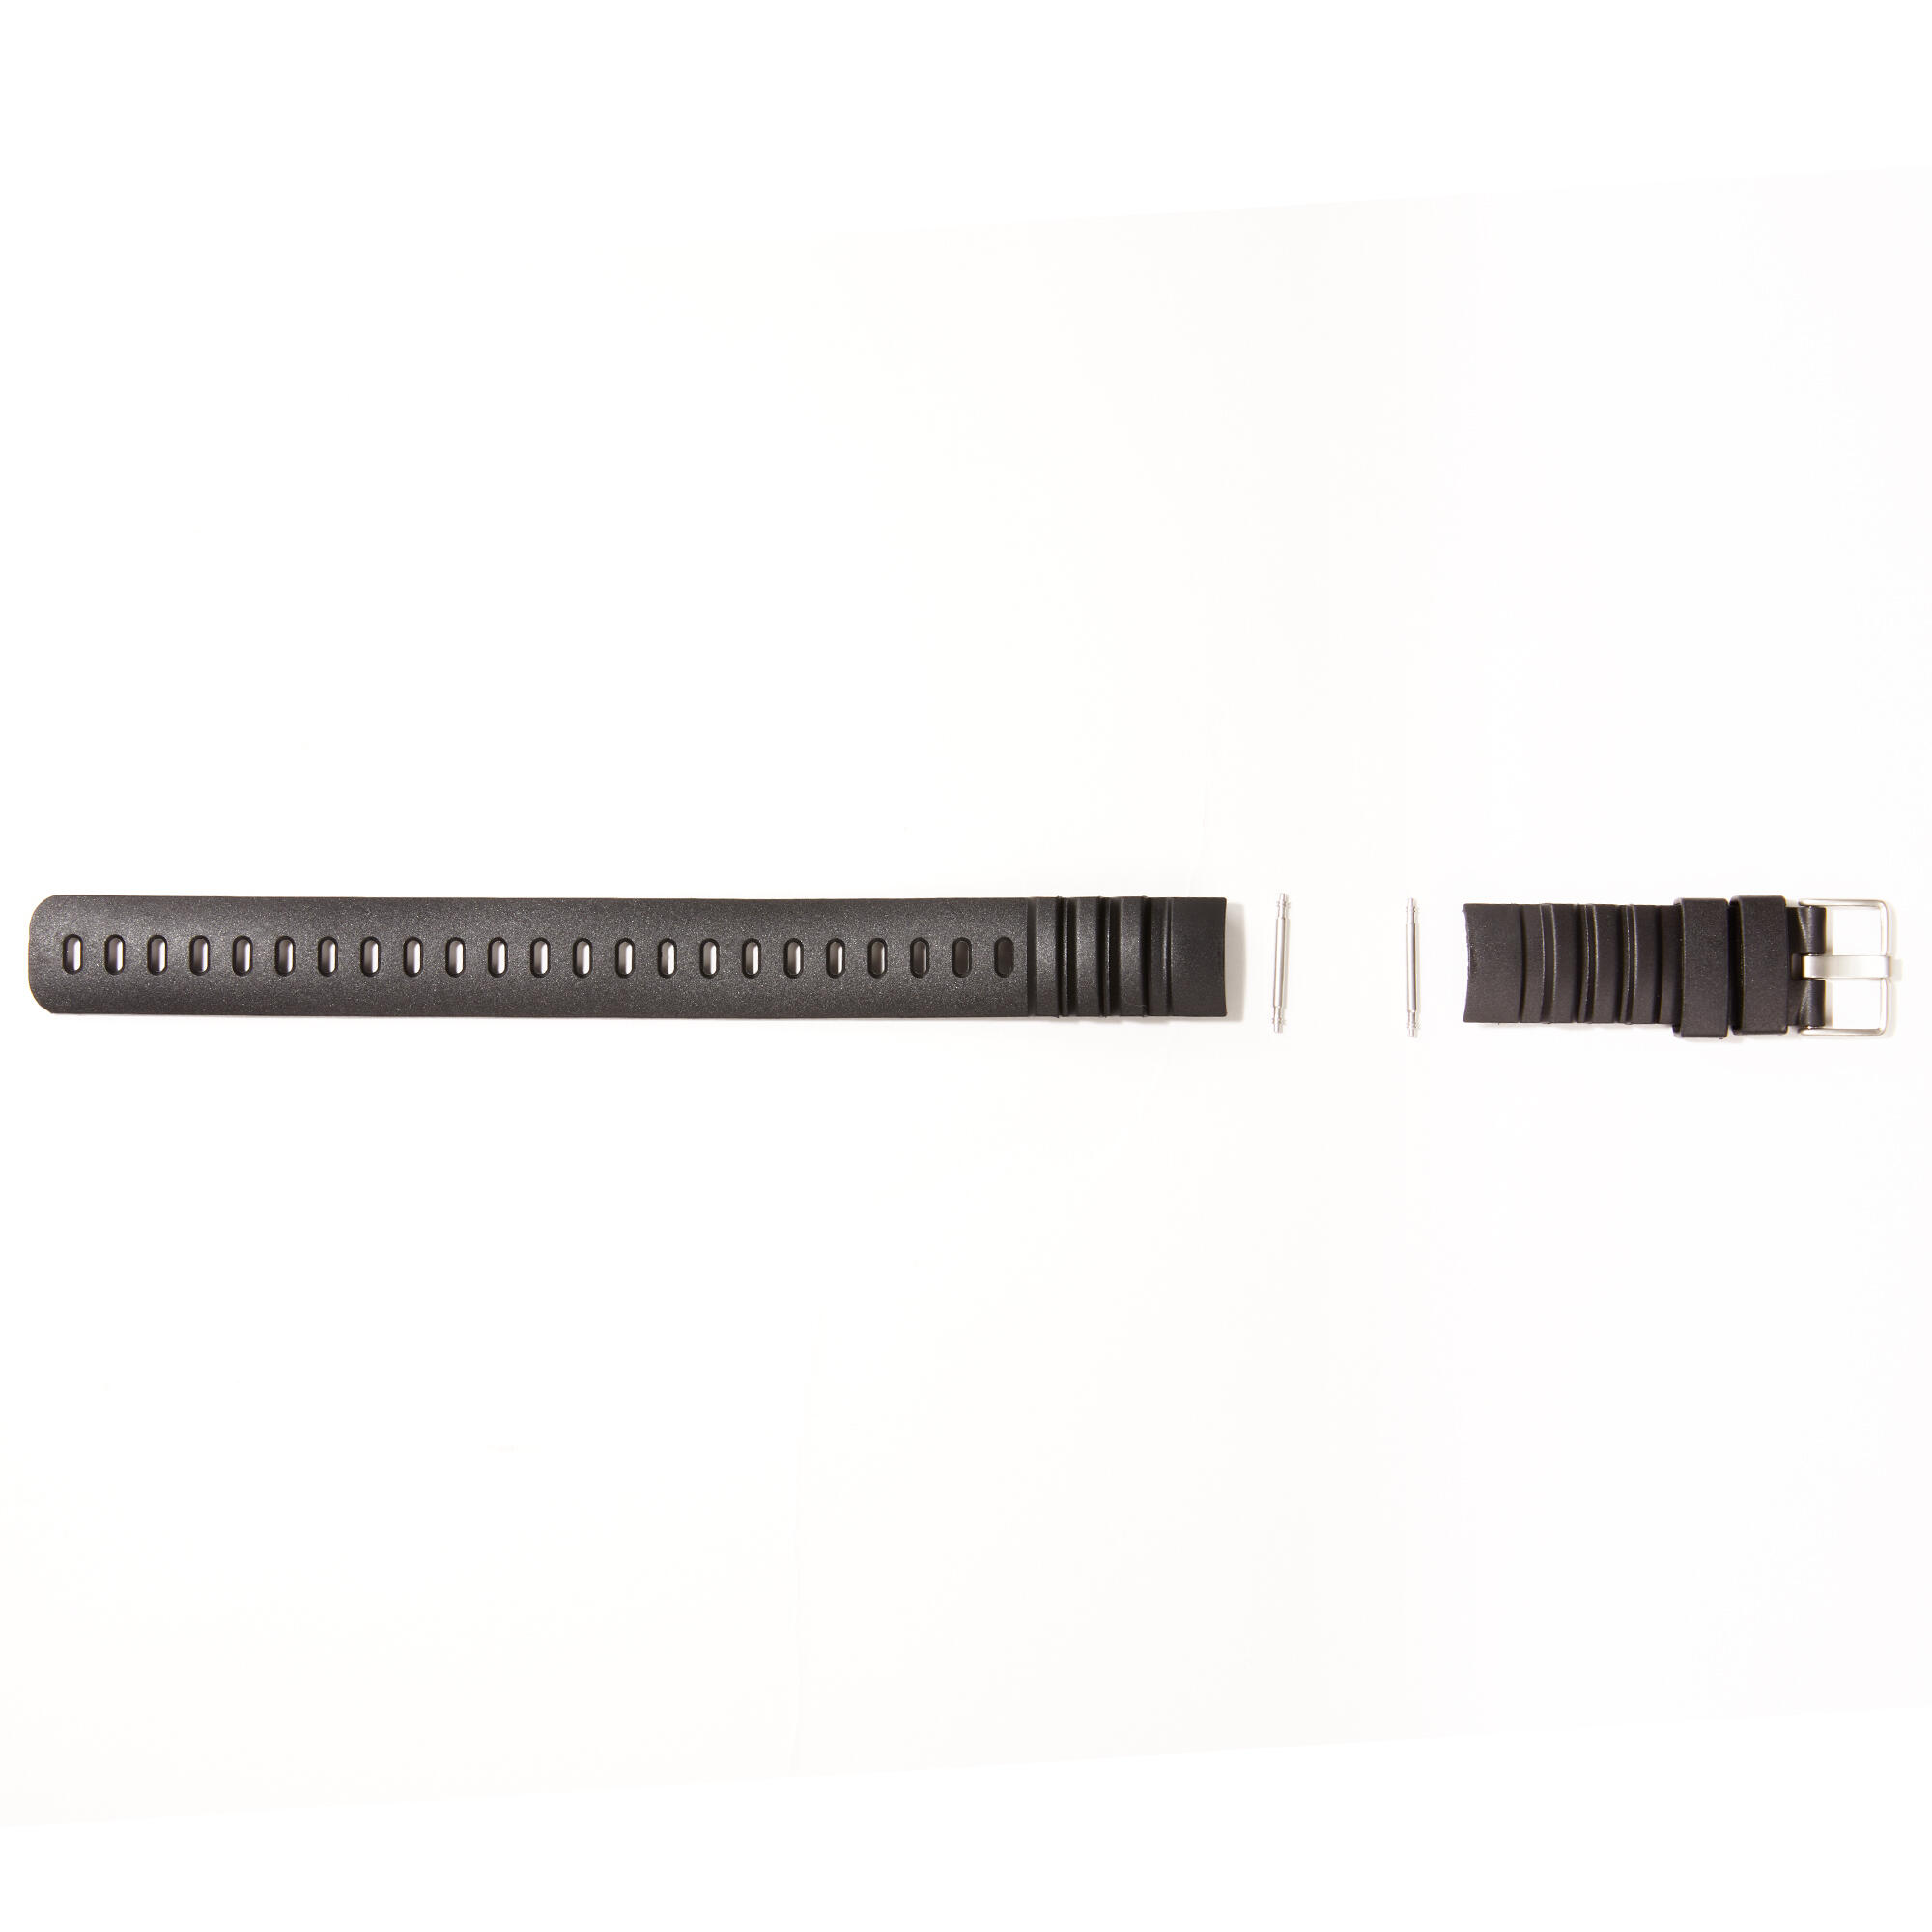 SUUNTO Bracelet Noir Pour Ordinateur De Plong&#xE9;e Suunto Zoop Novo Ou Vyper -